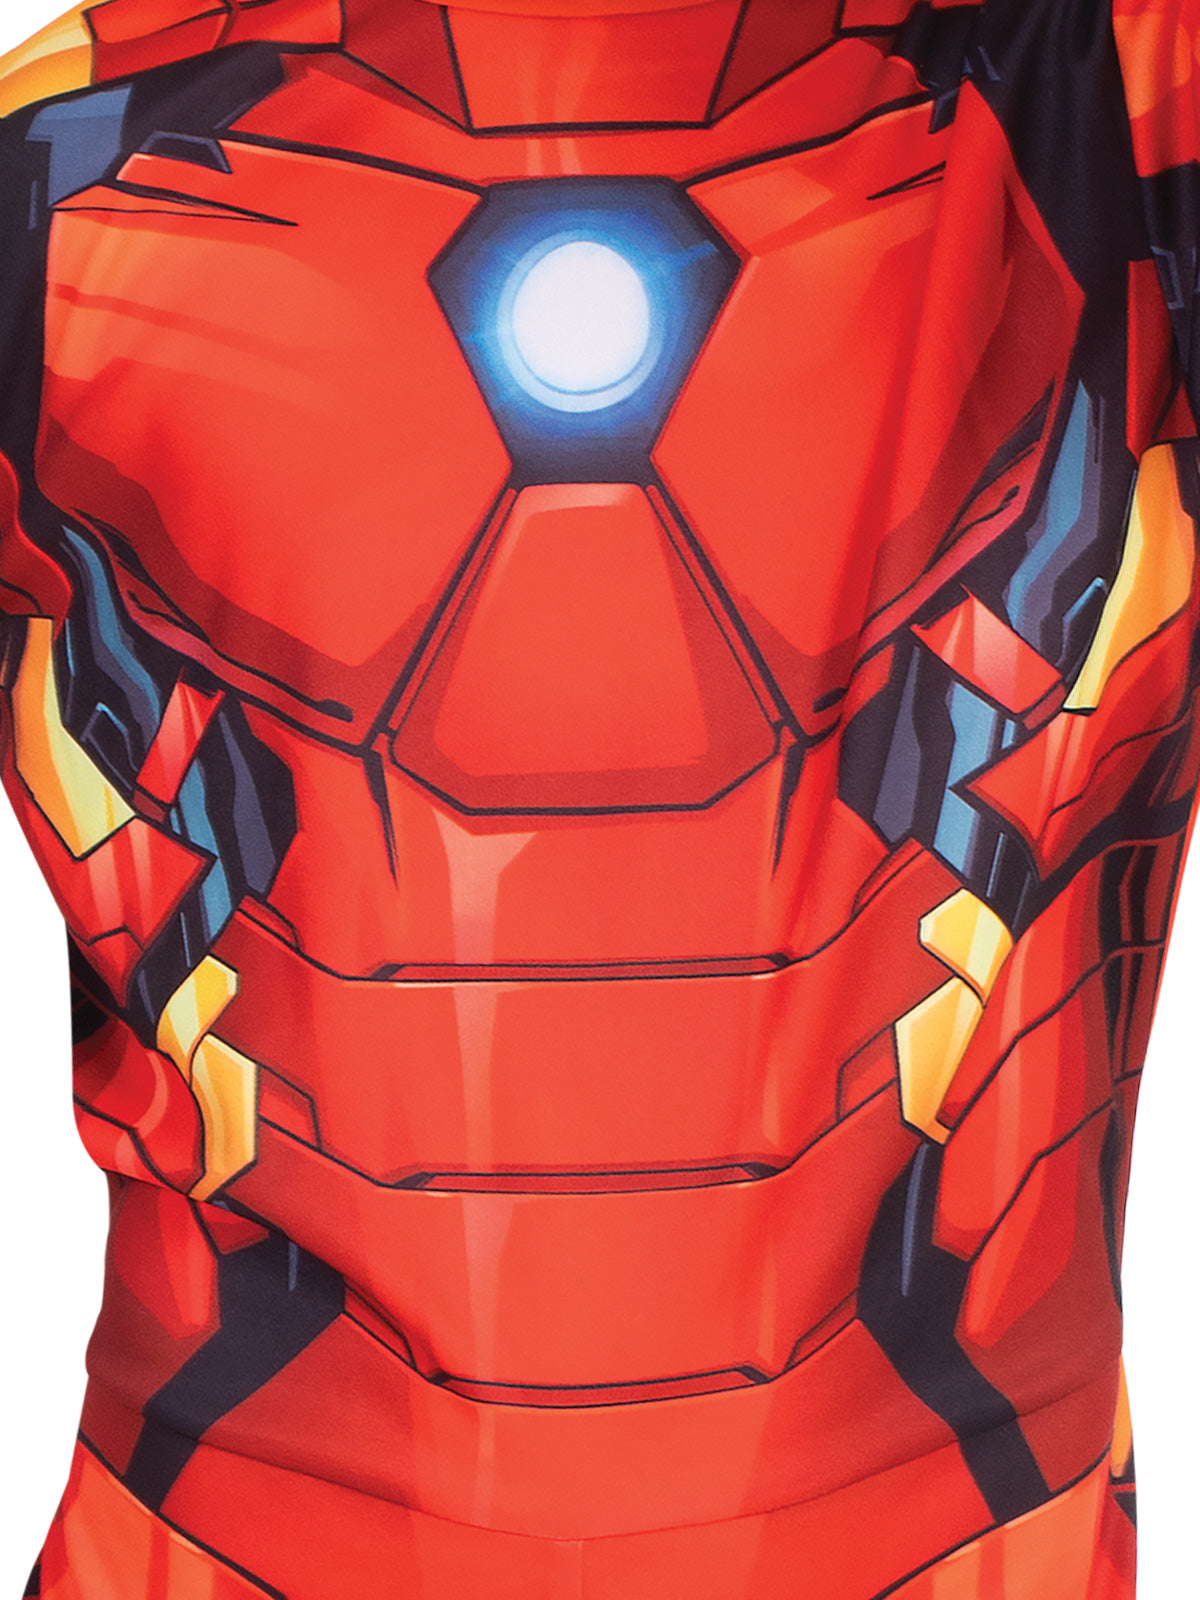 Iron Man Clssic Costume Child Licensed